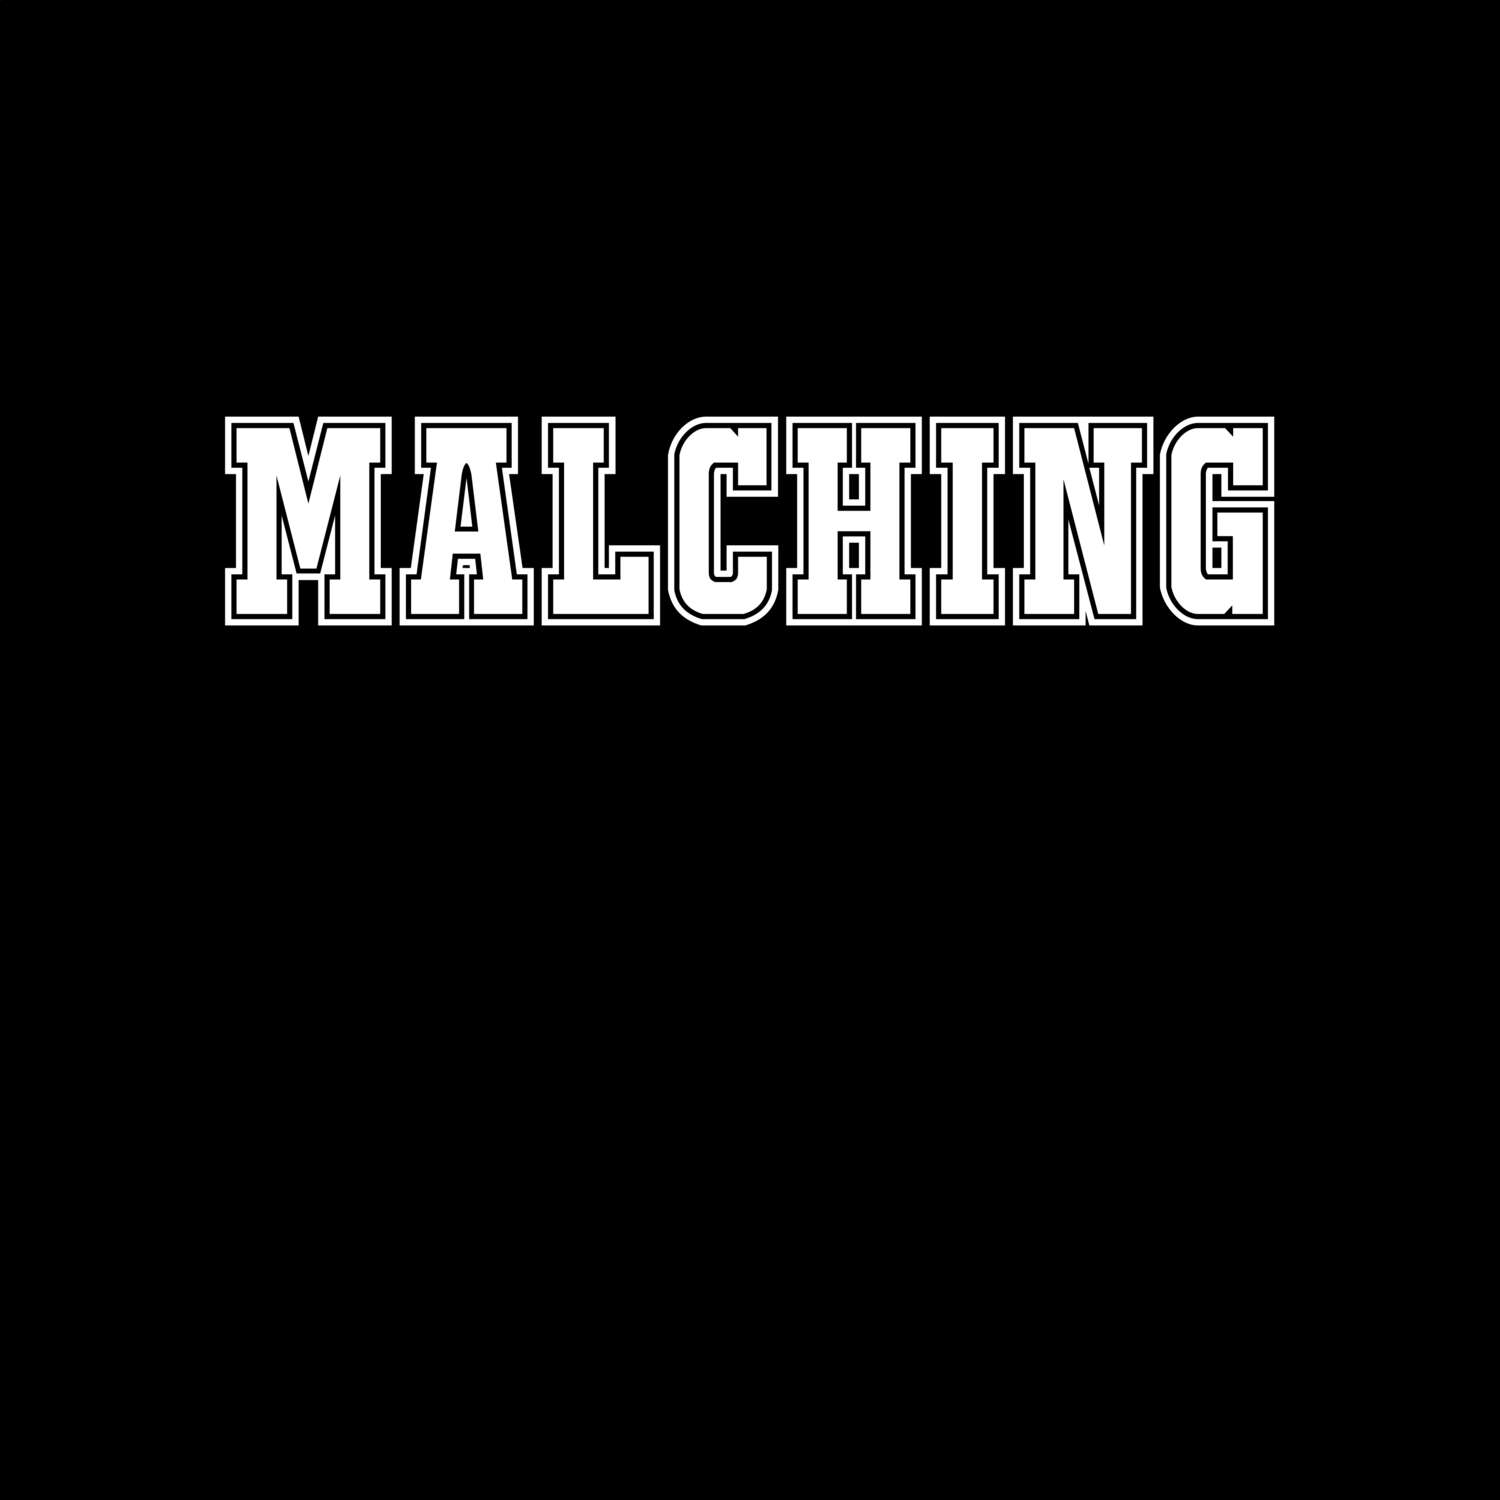 Malching T-Shirt »Classic«